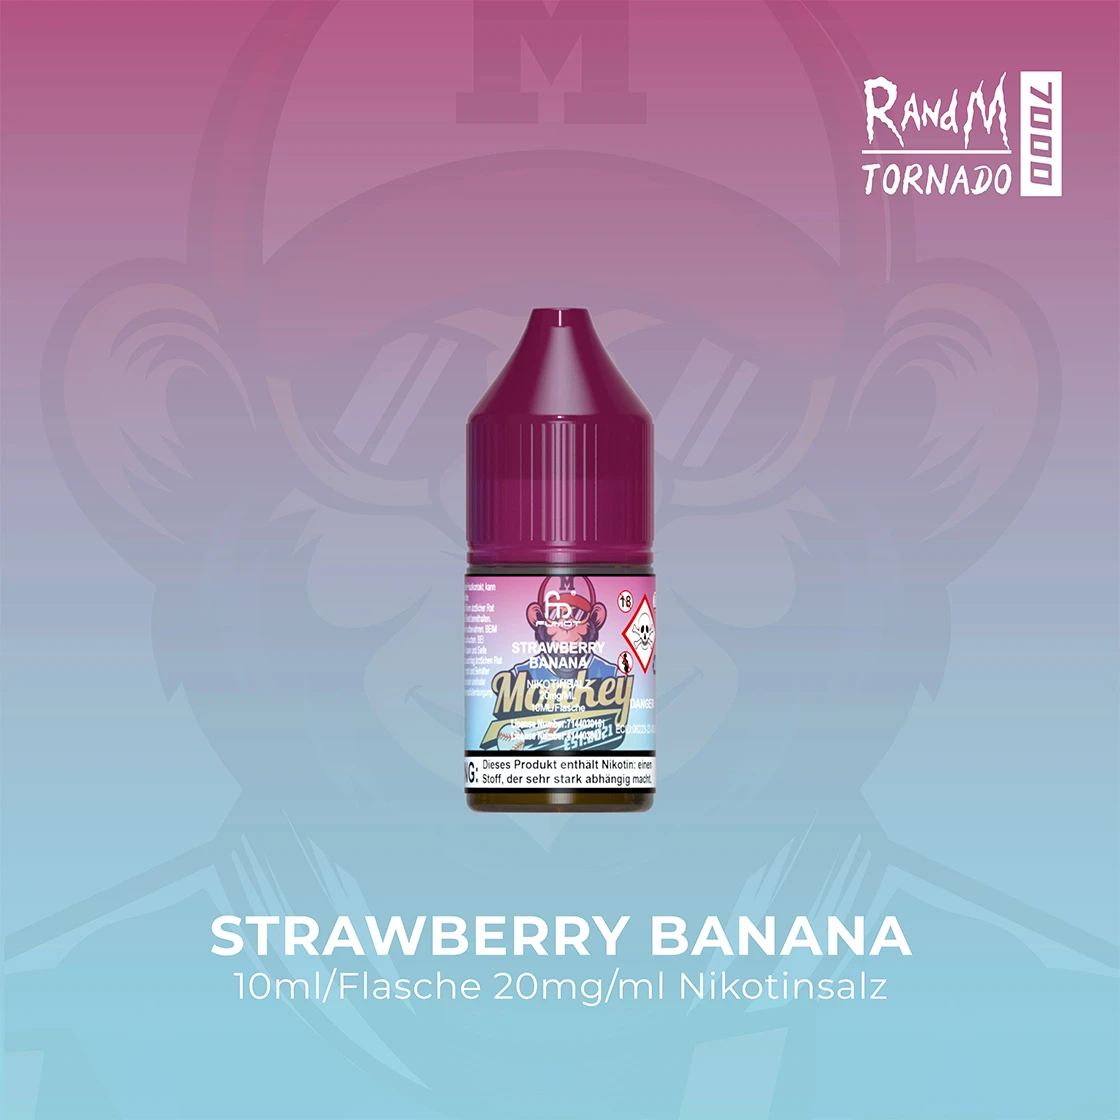 RandM Tornado 7000 Strawberry Banana E-Liquid Nikotinsalz 20 mg | Vape Liquids 1